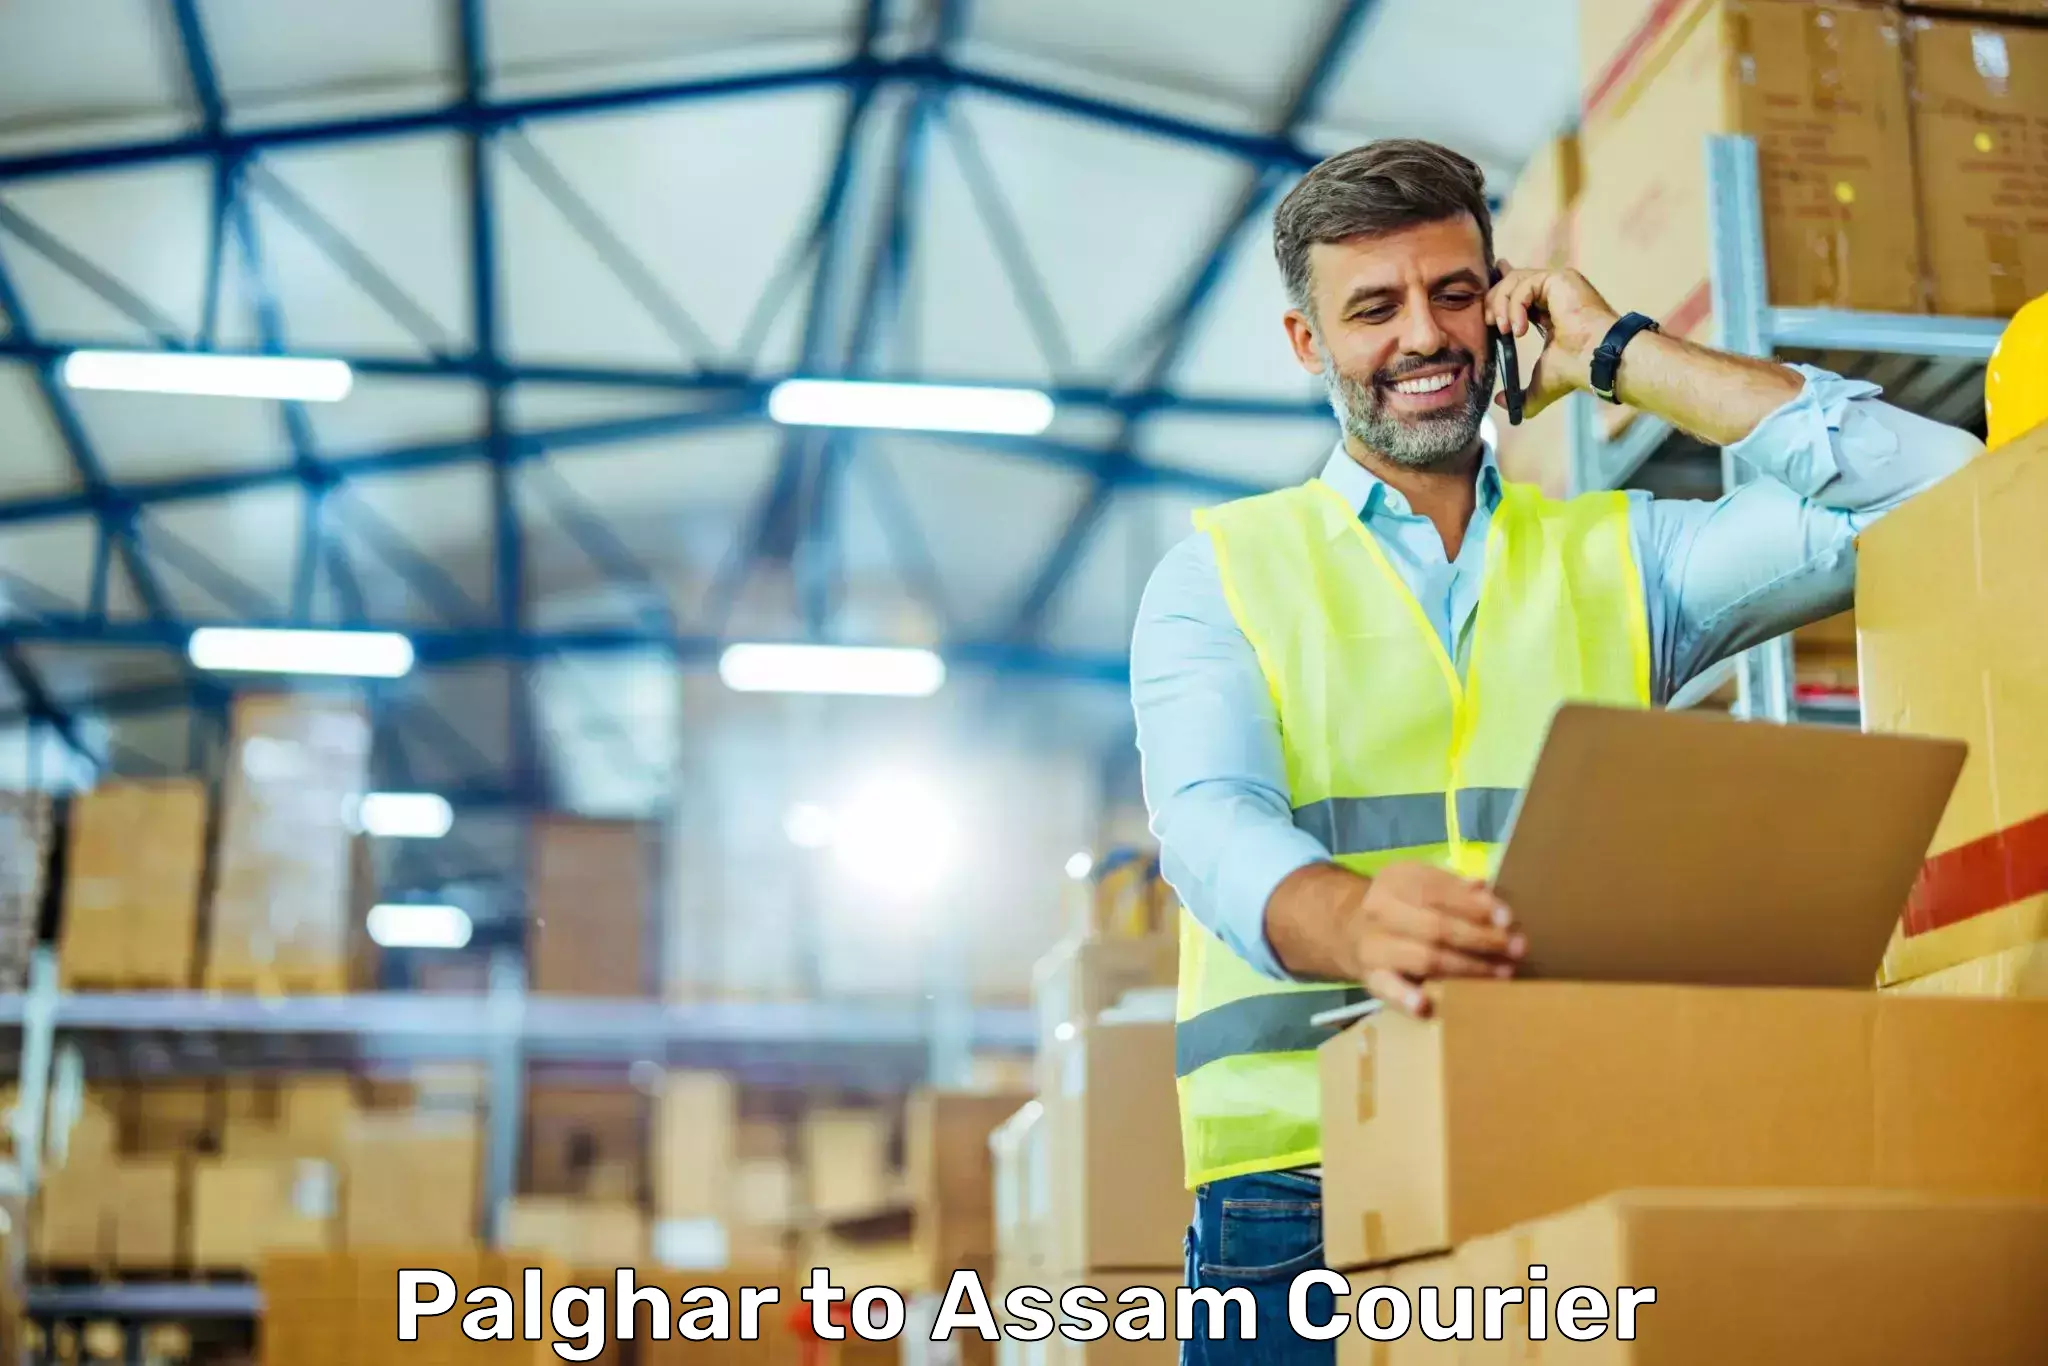 Global logistics network Palghar to Assam